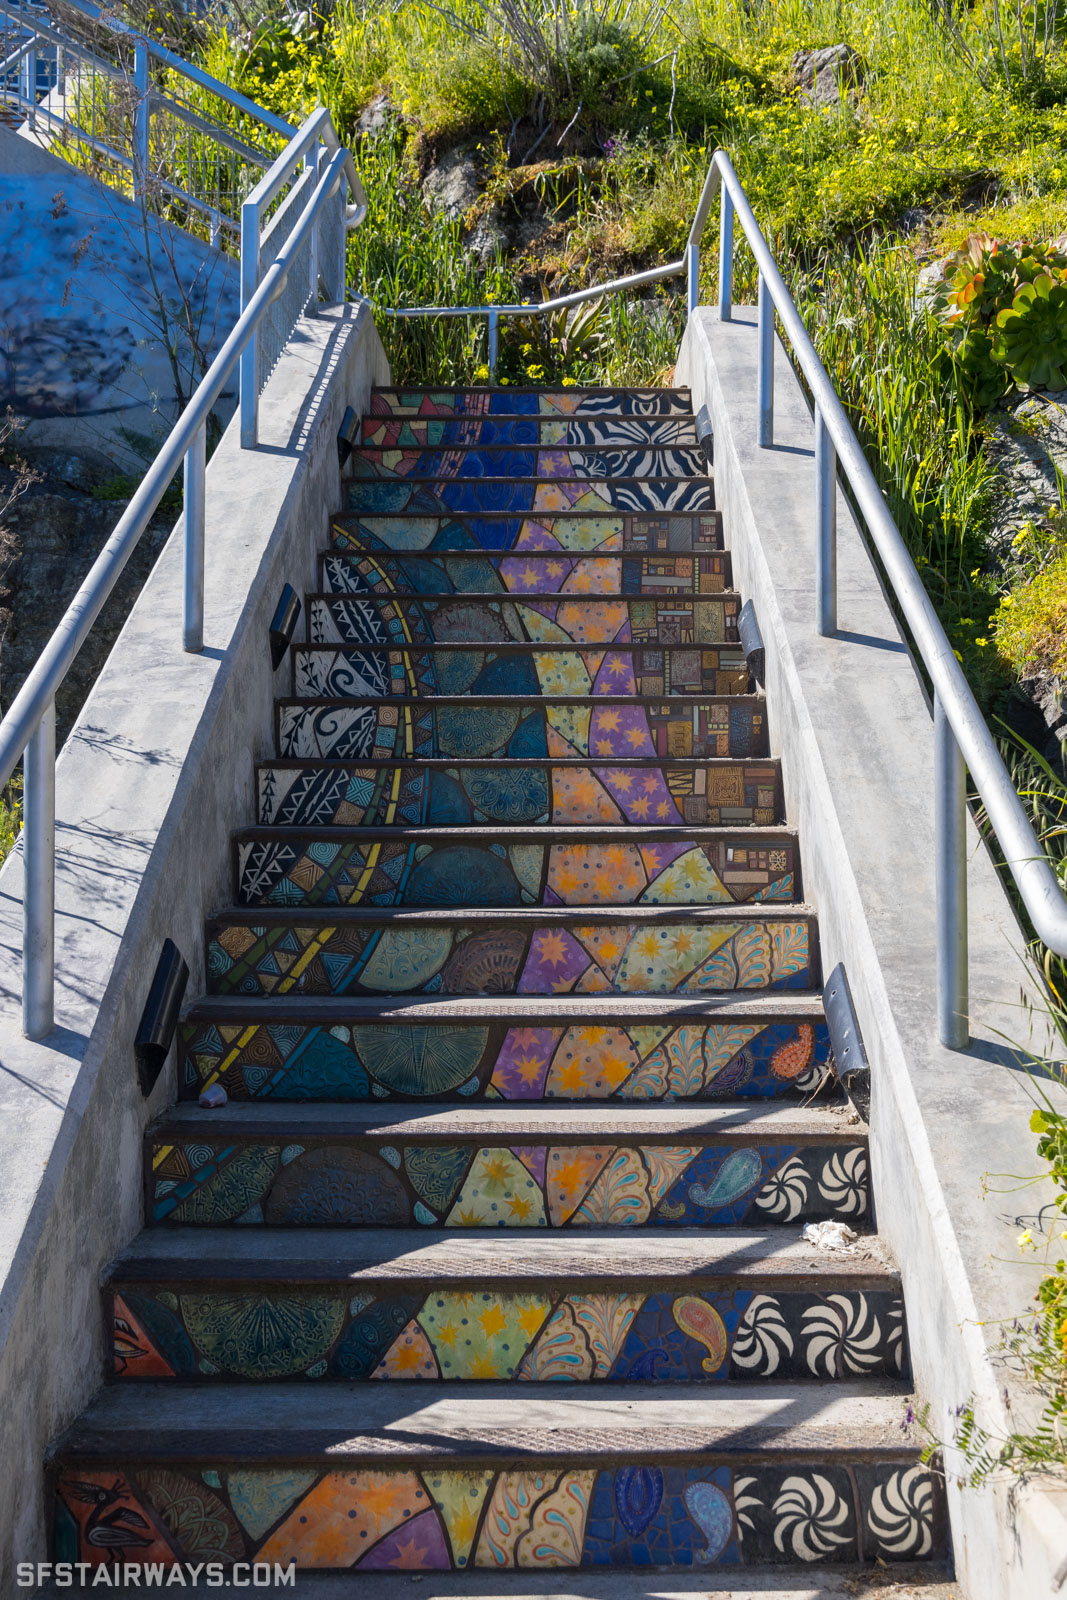 Narrow street and steep steps of Via … – License image – 13819118 ❘  lookphotos